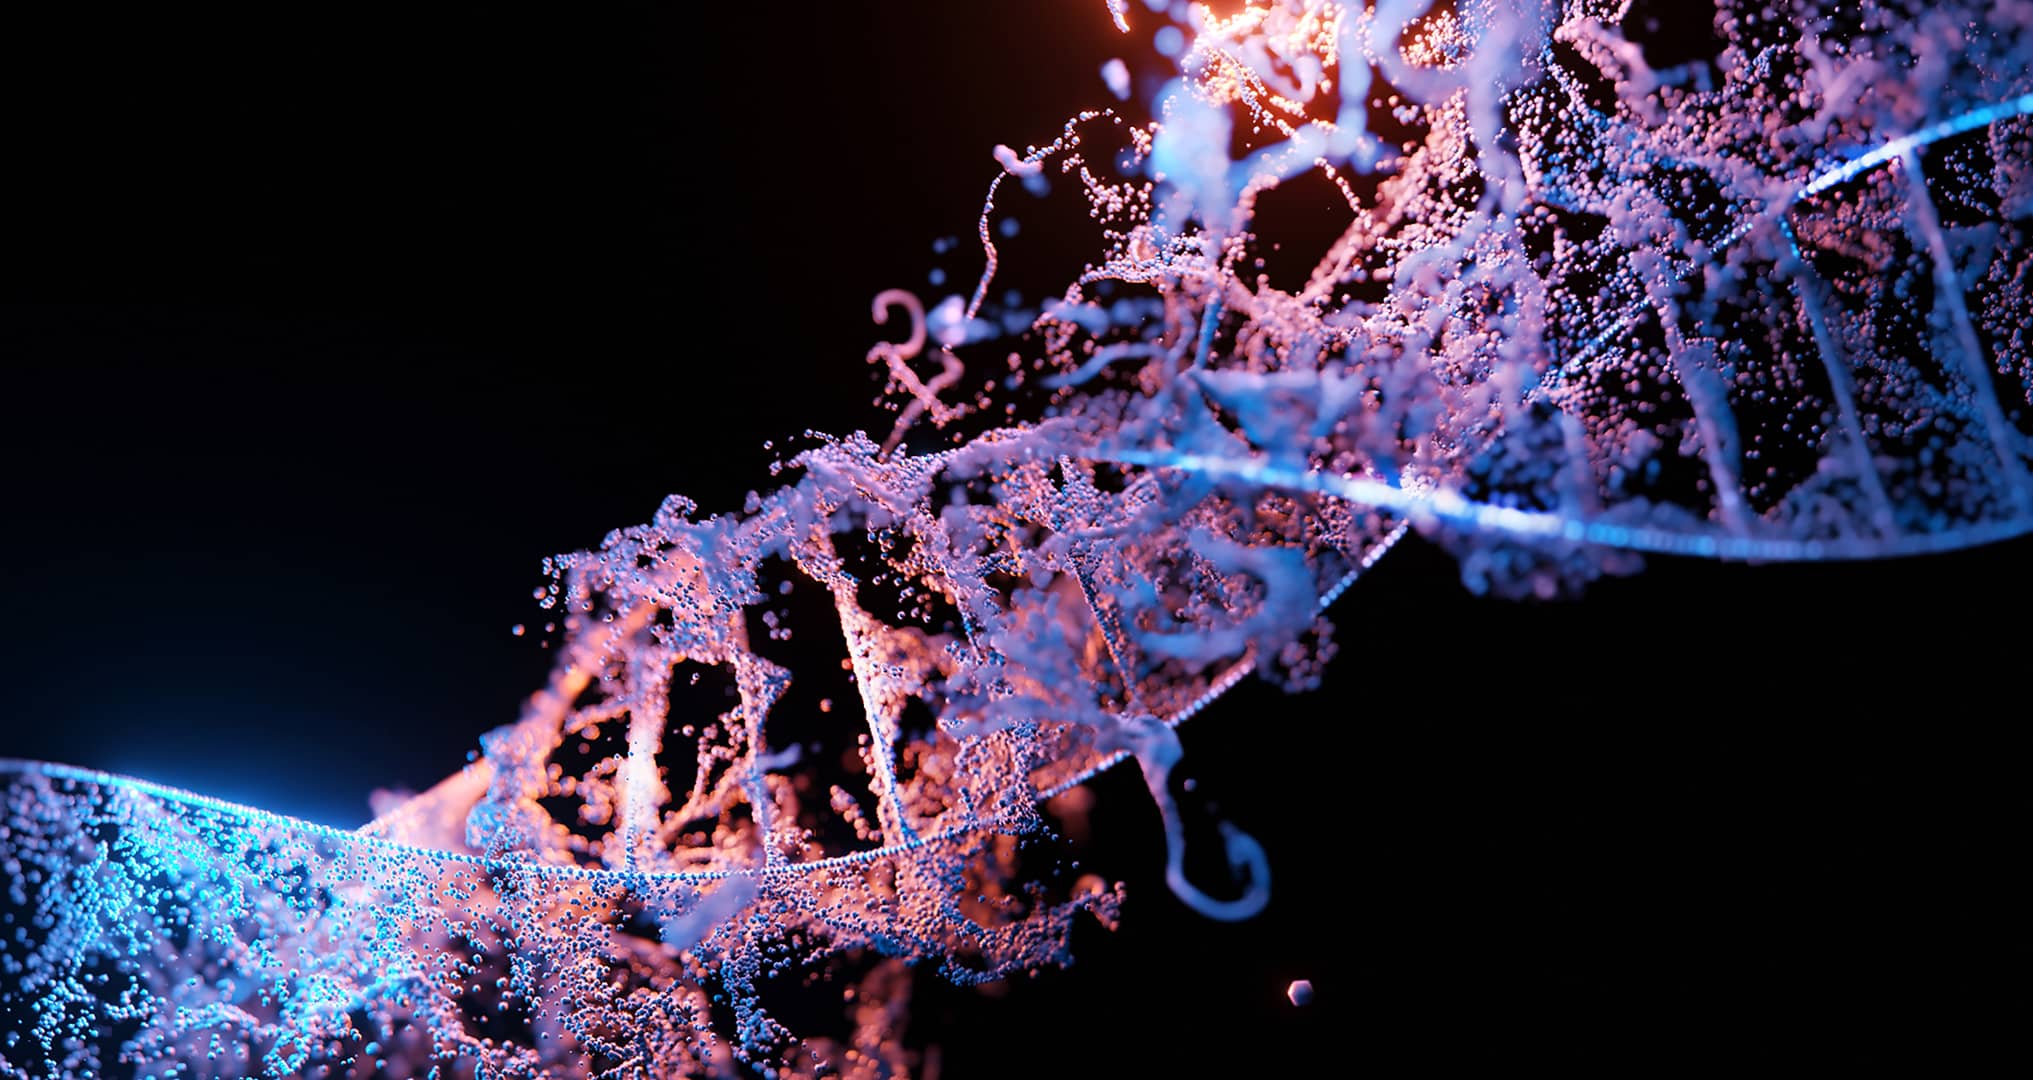 DNA zoomed in on black backround